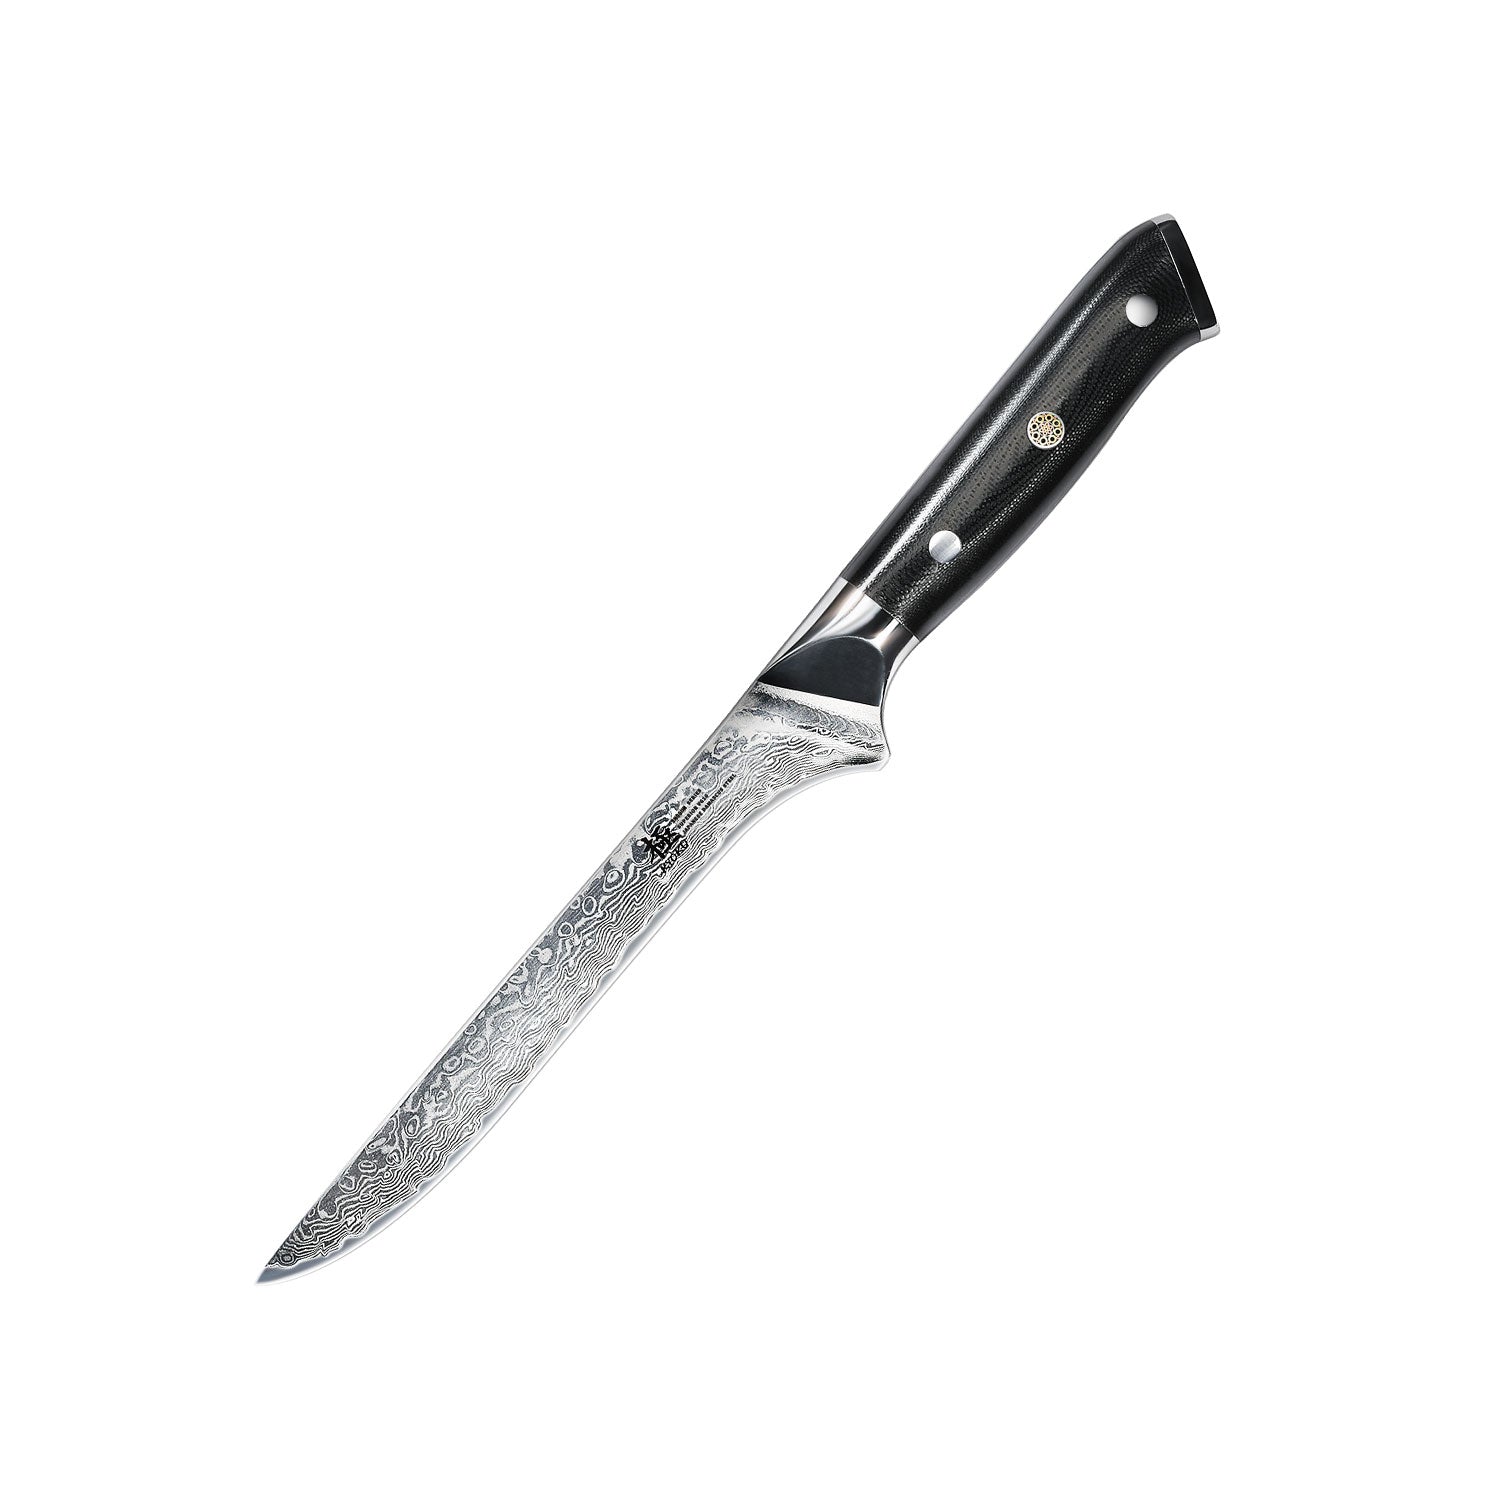  HOSHANHO Fillet Knife 7 Inch, Super Sharp Boning Knife